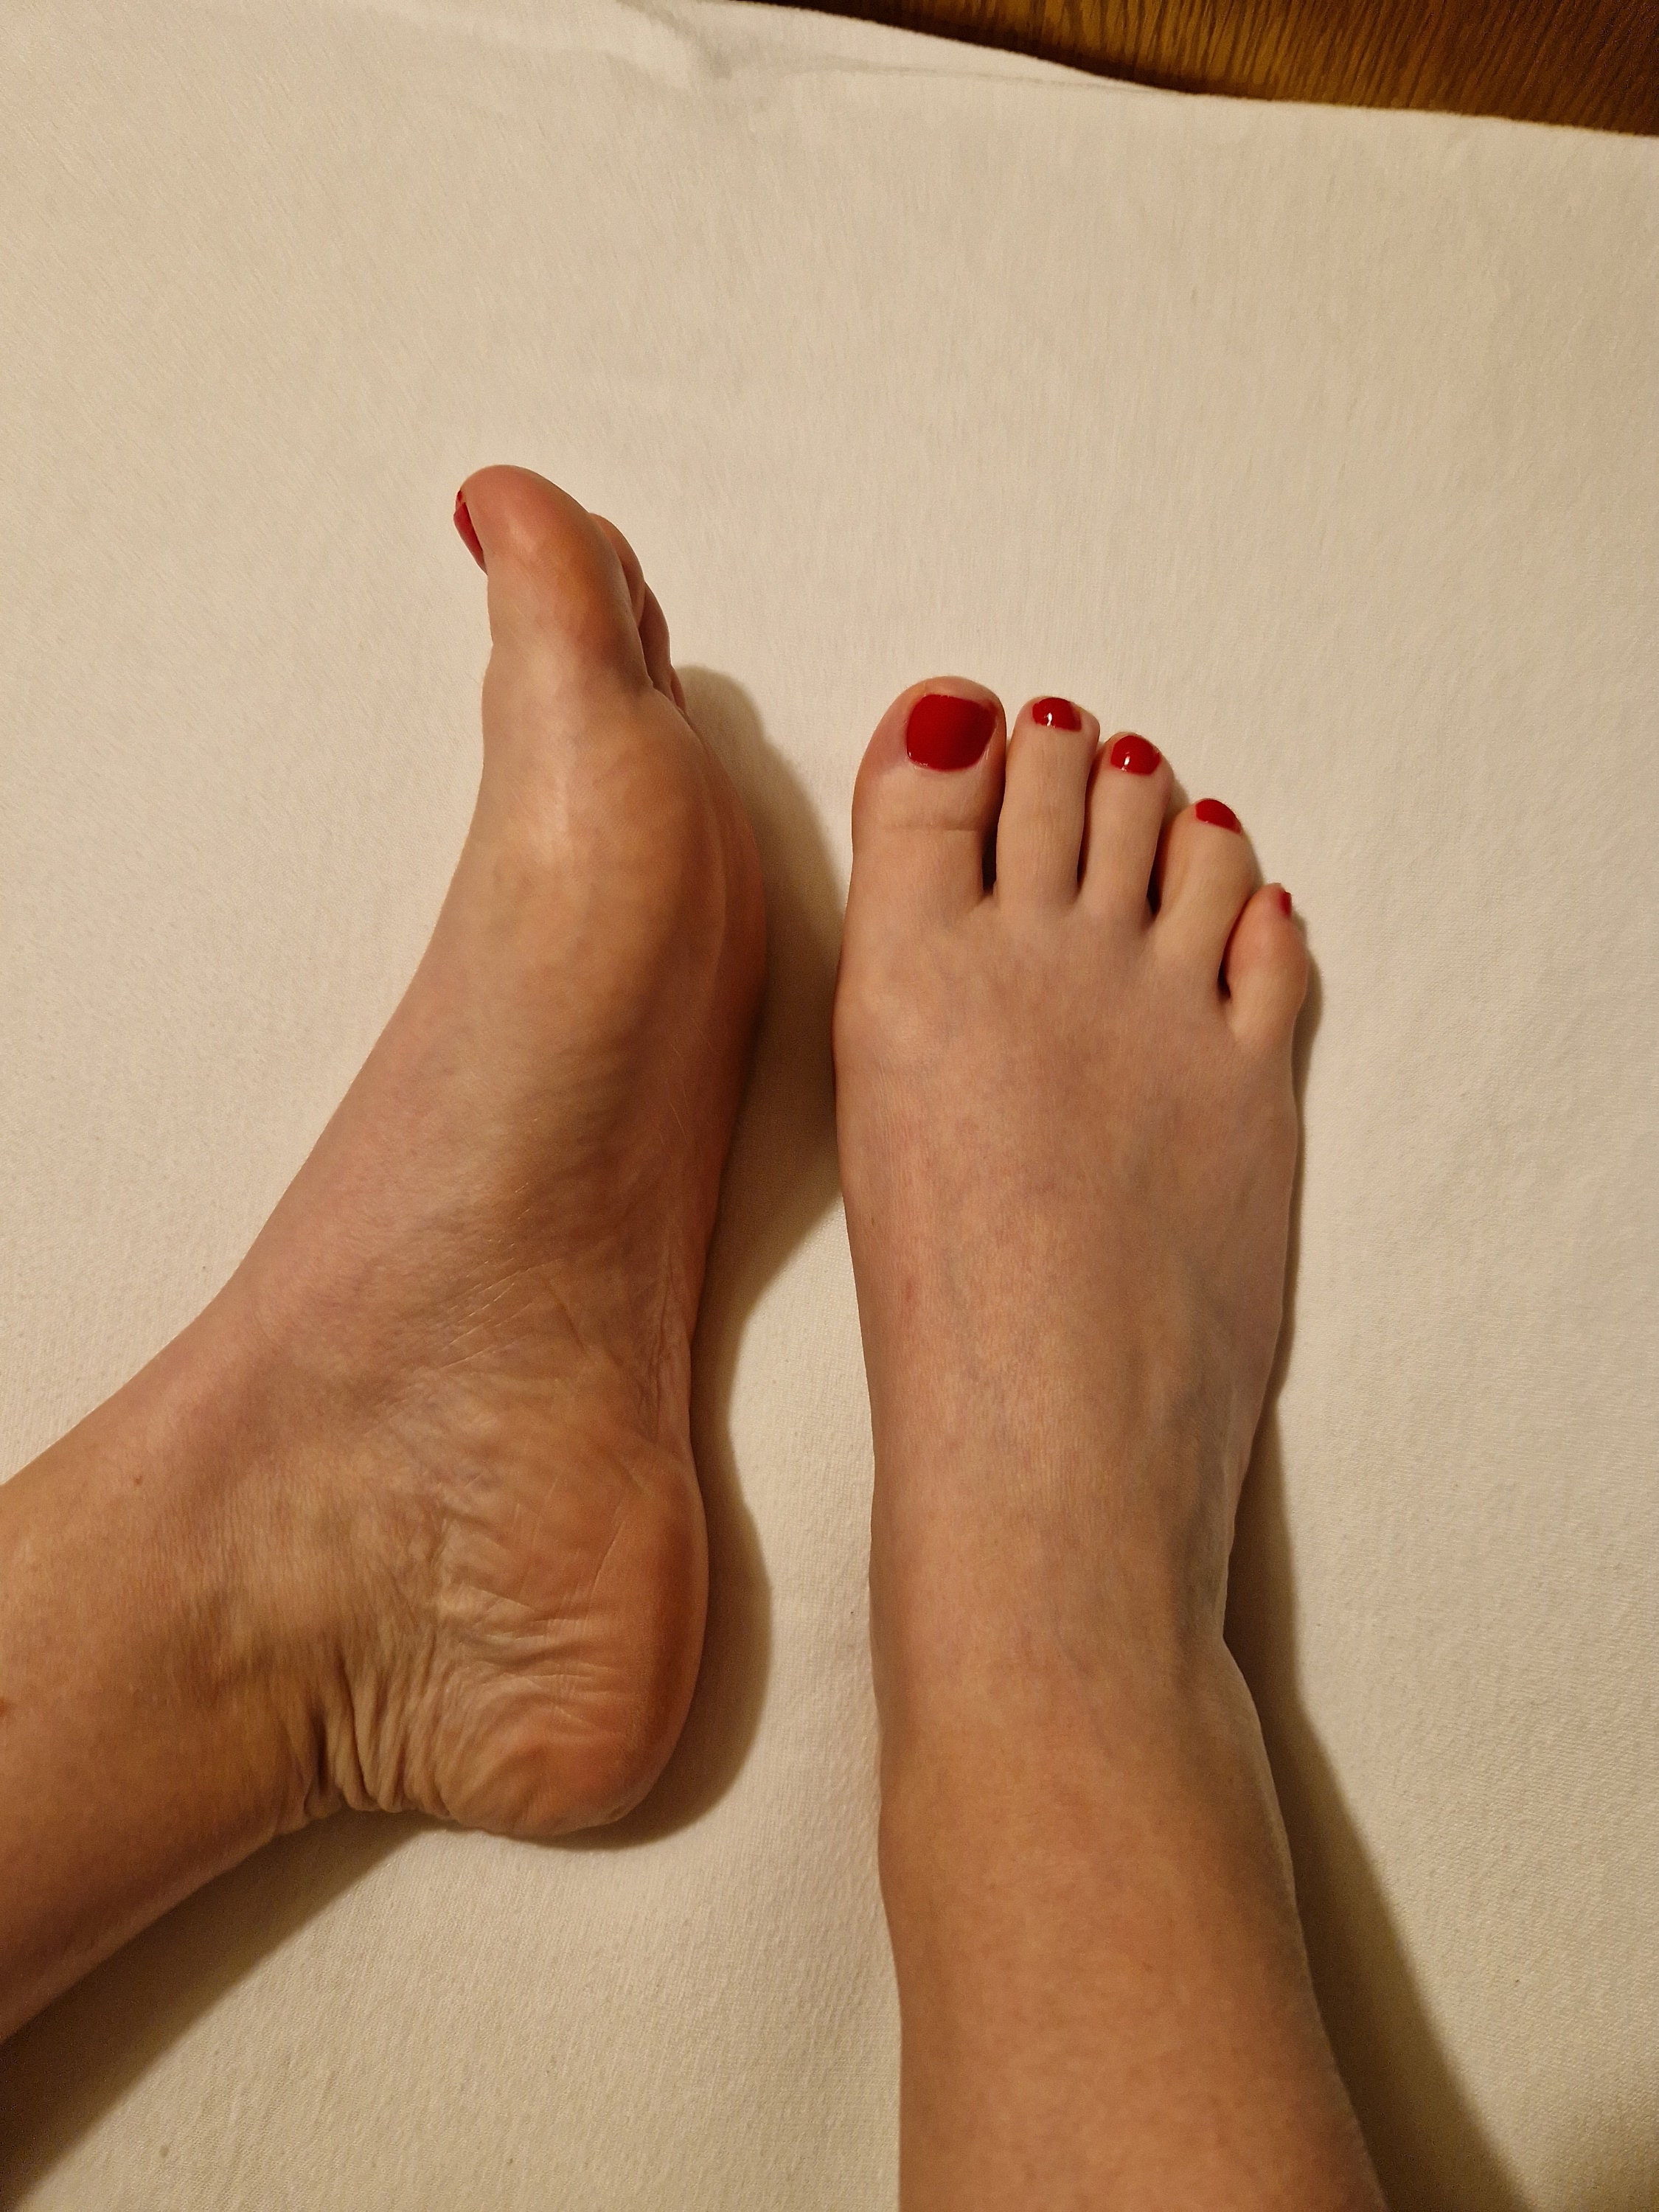 Woman's Feet Pics -  Canada